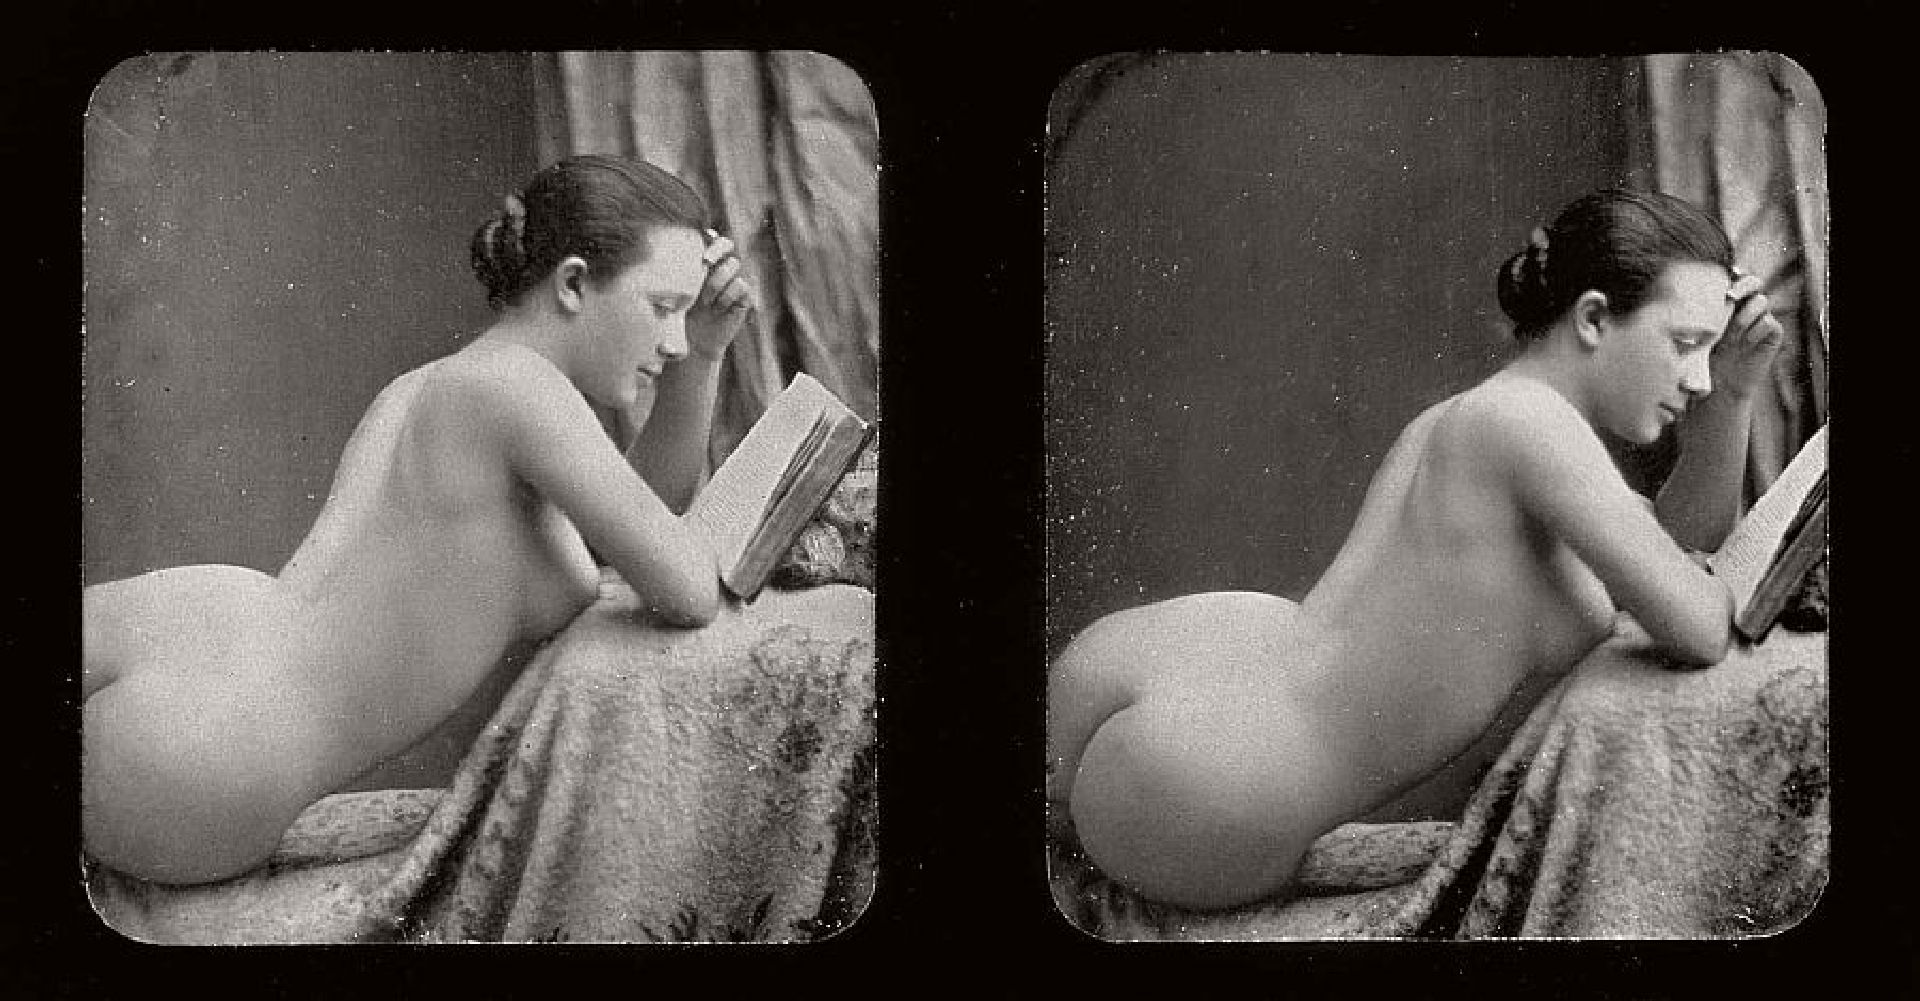 19th century nudity